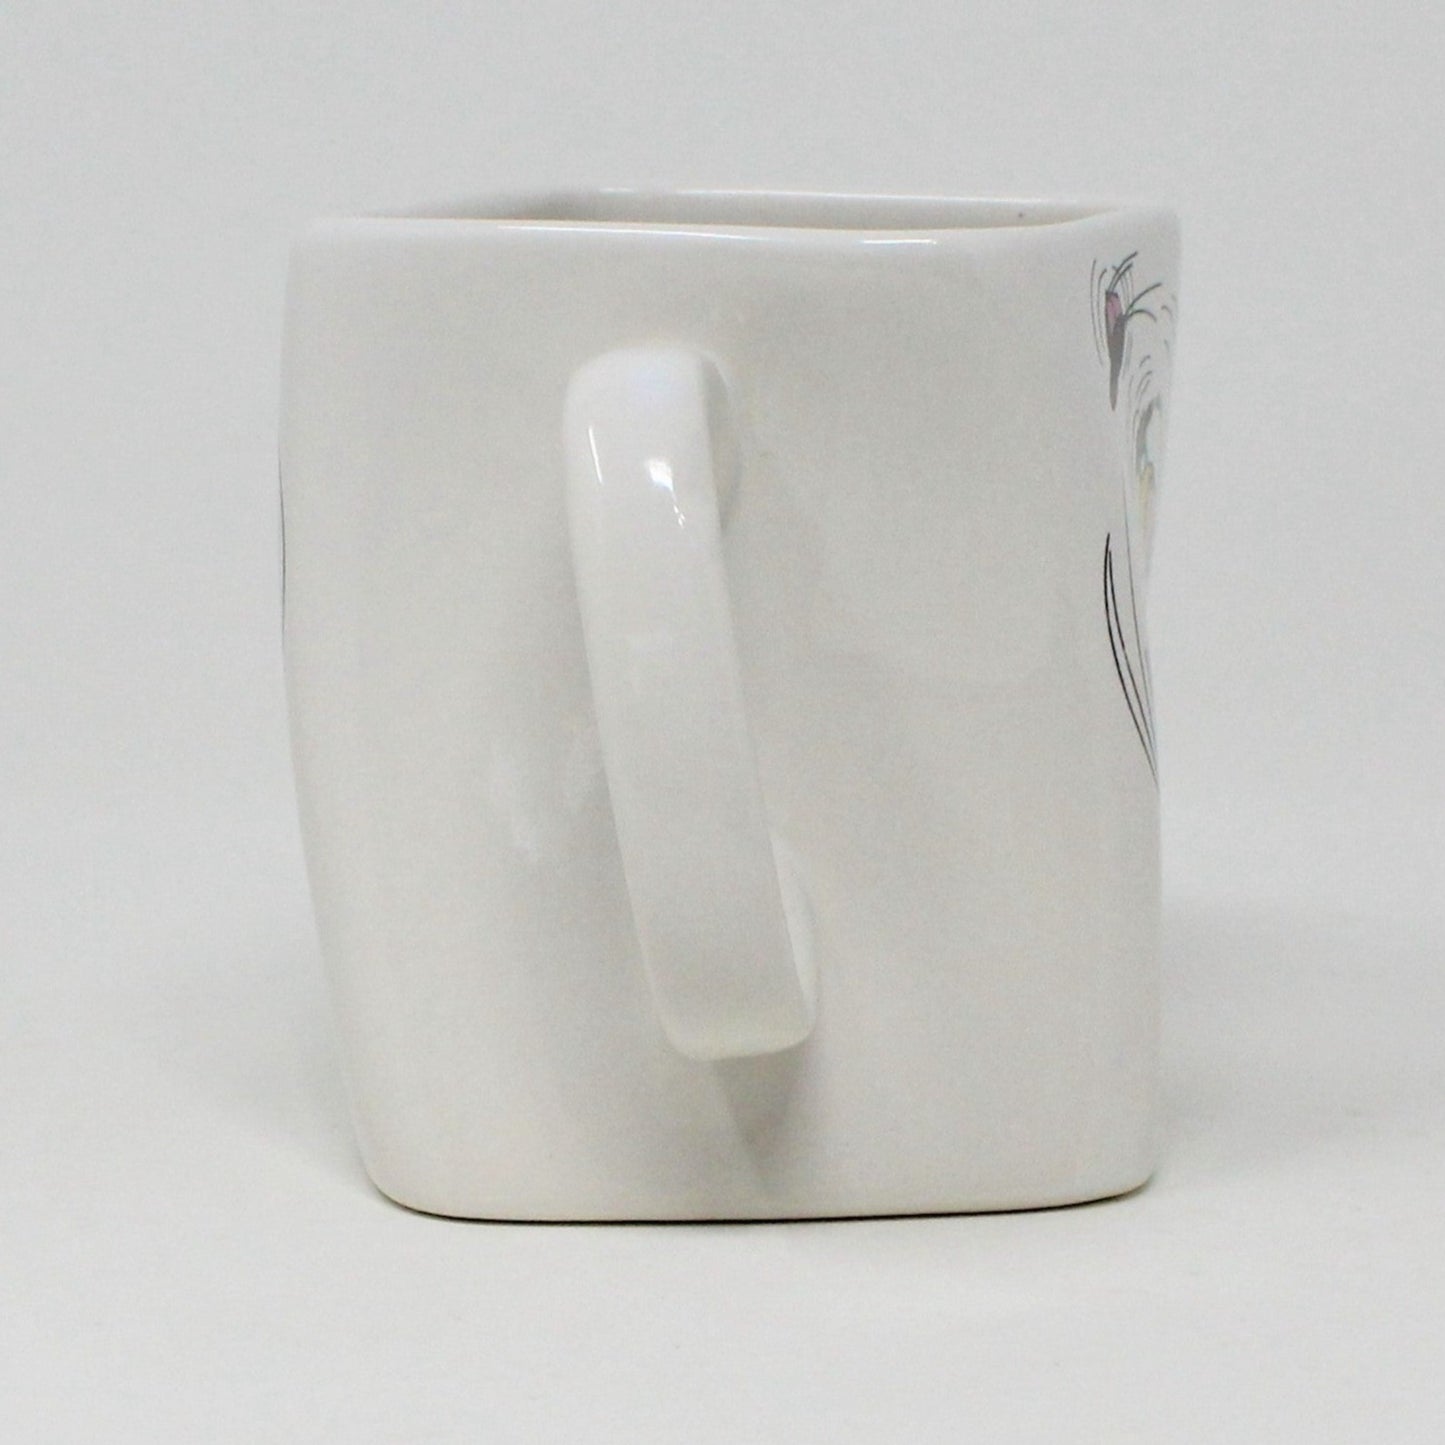 Mug, Golf Gifts, Results of Over Swing, Funny Shape, Ceramic, Vintage 1991